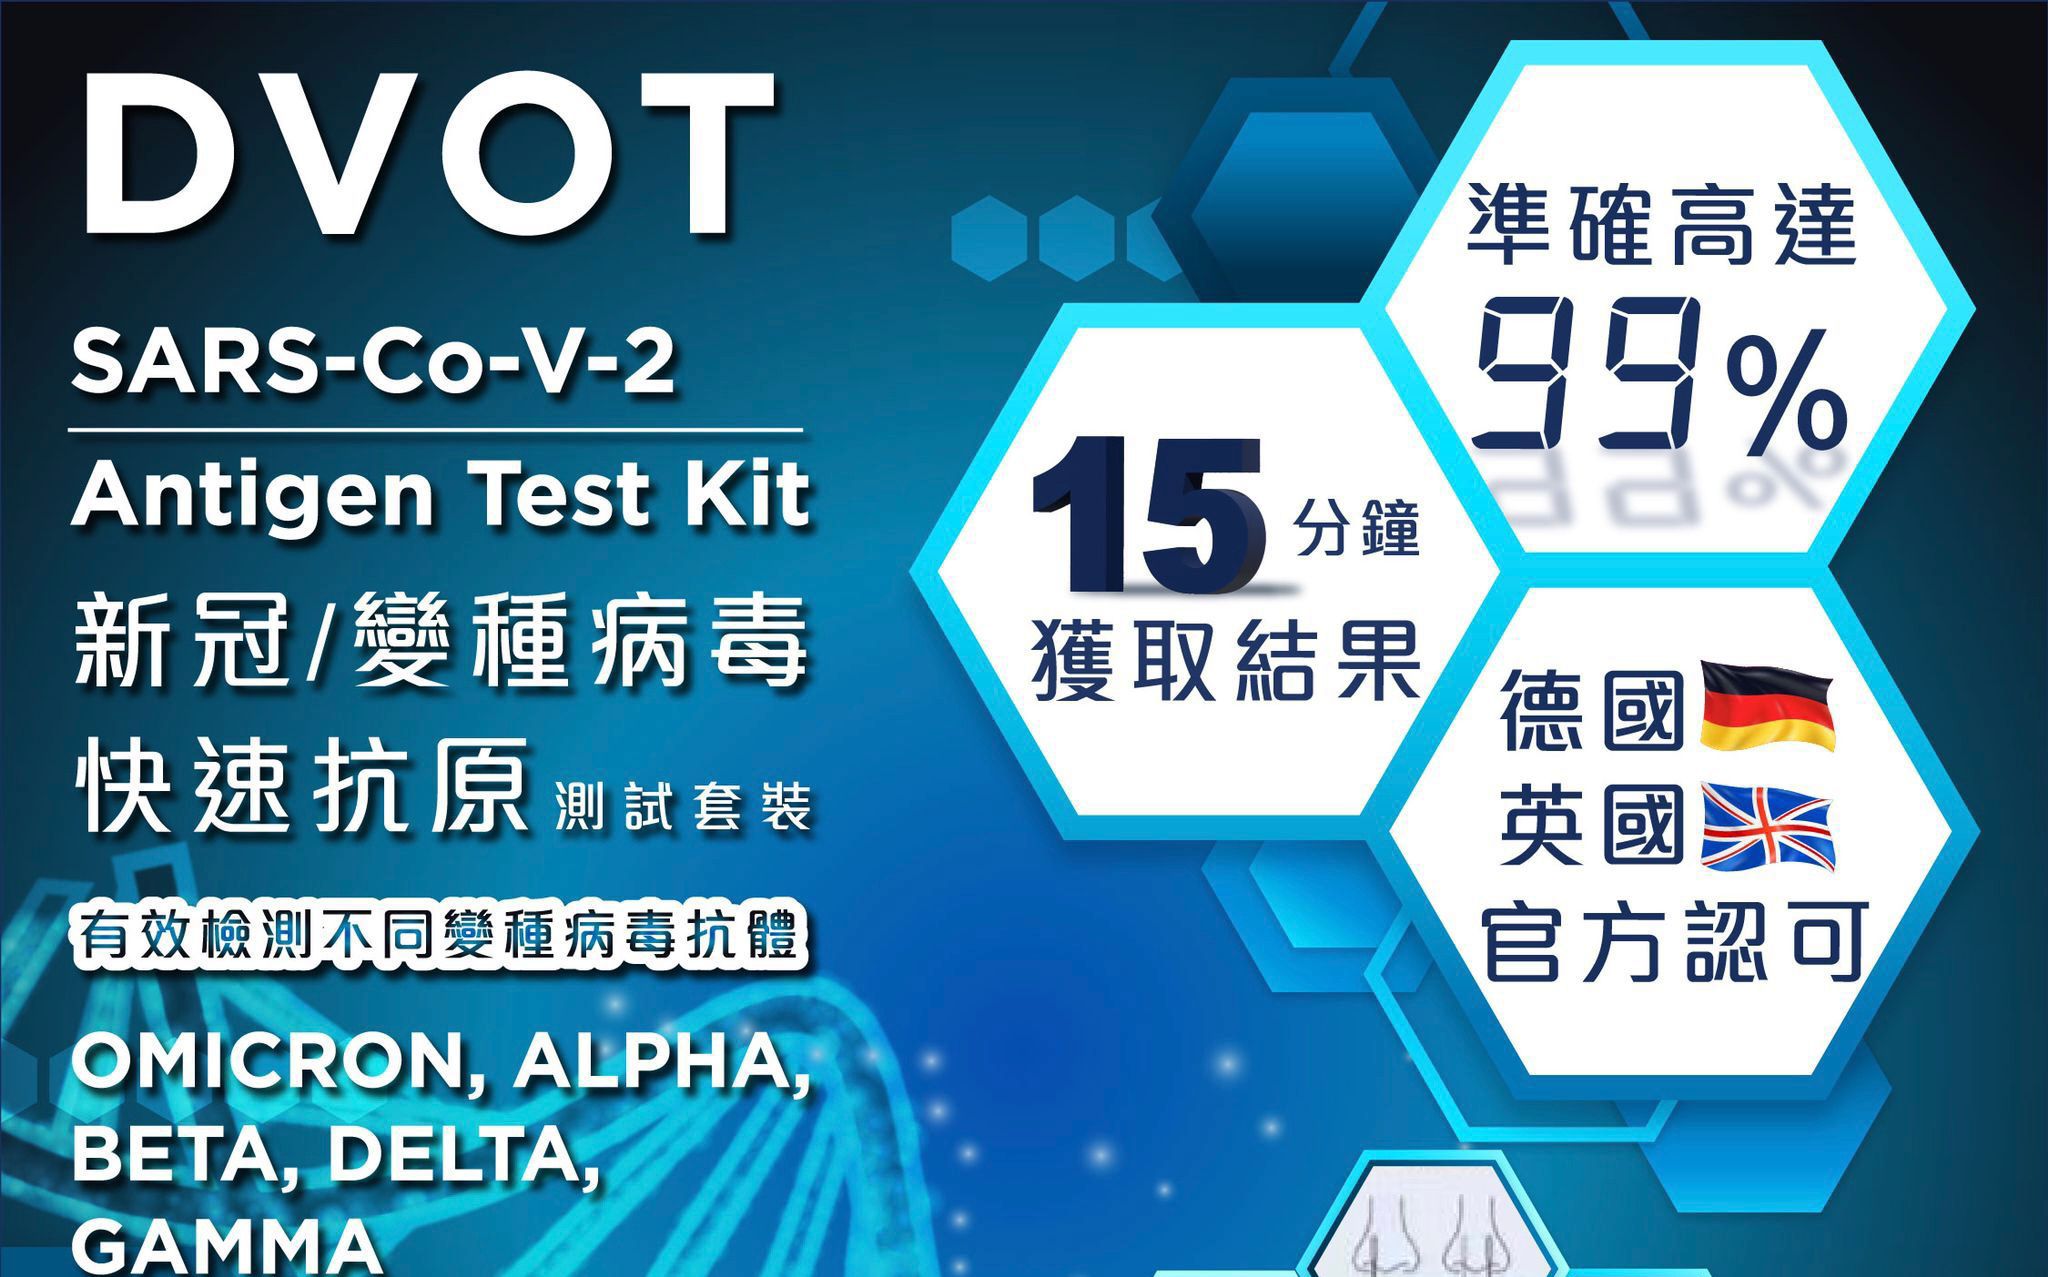 DVOT COVID-19 Antigen Test Kit